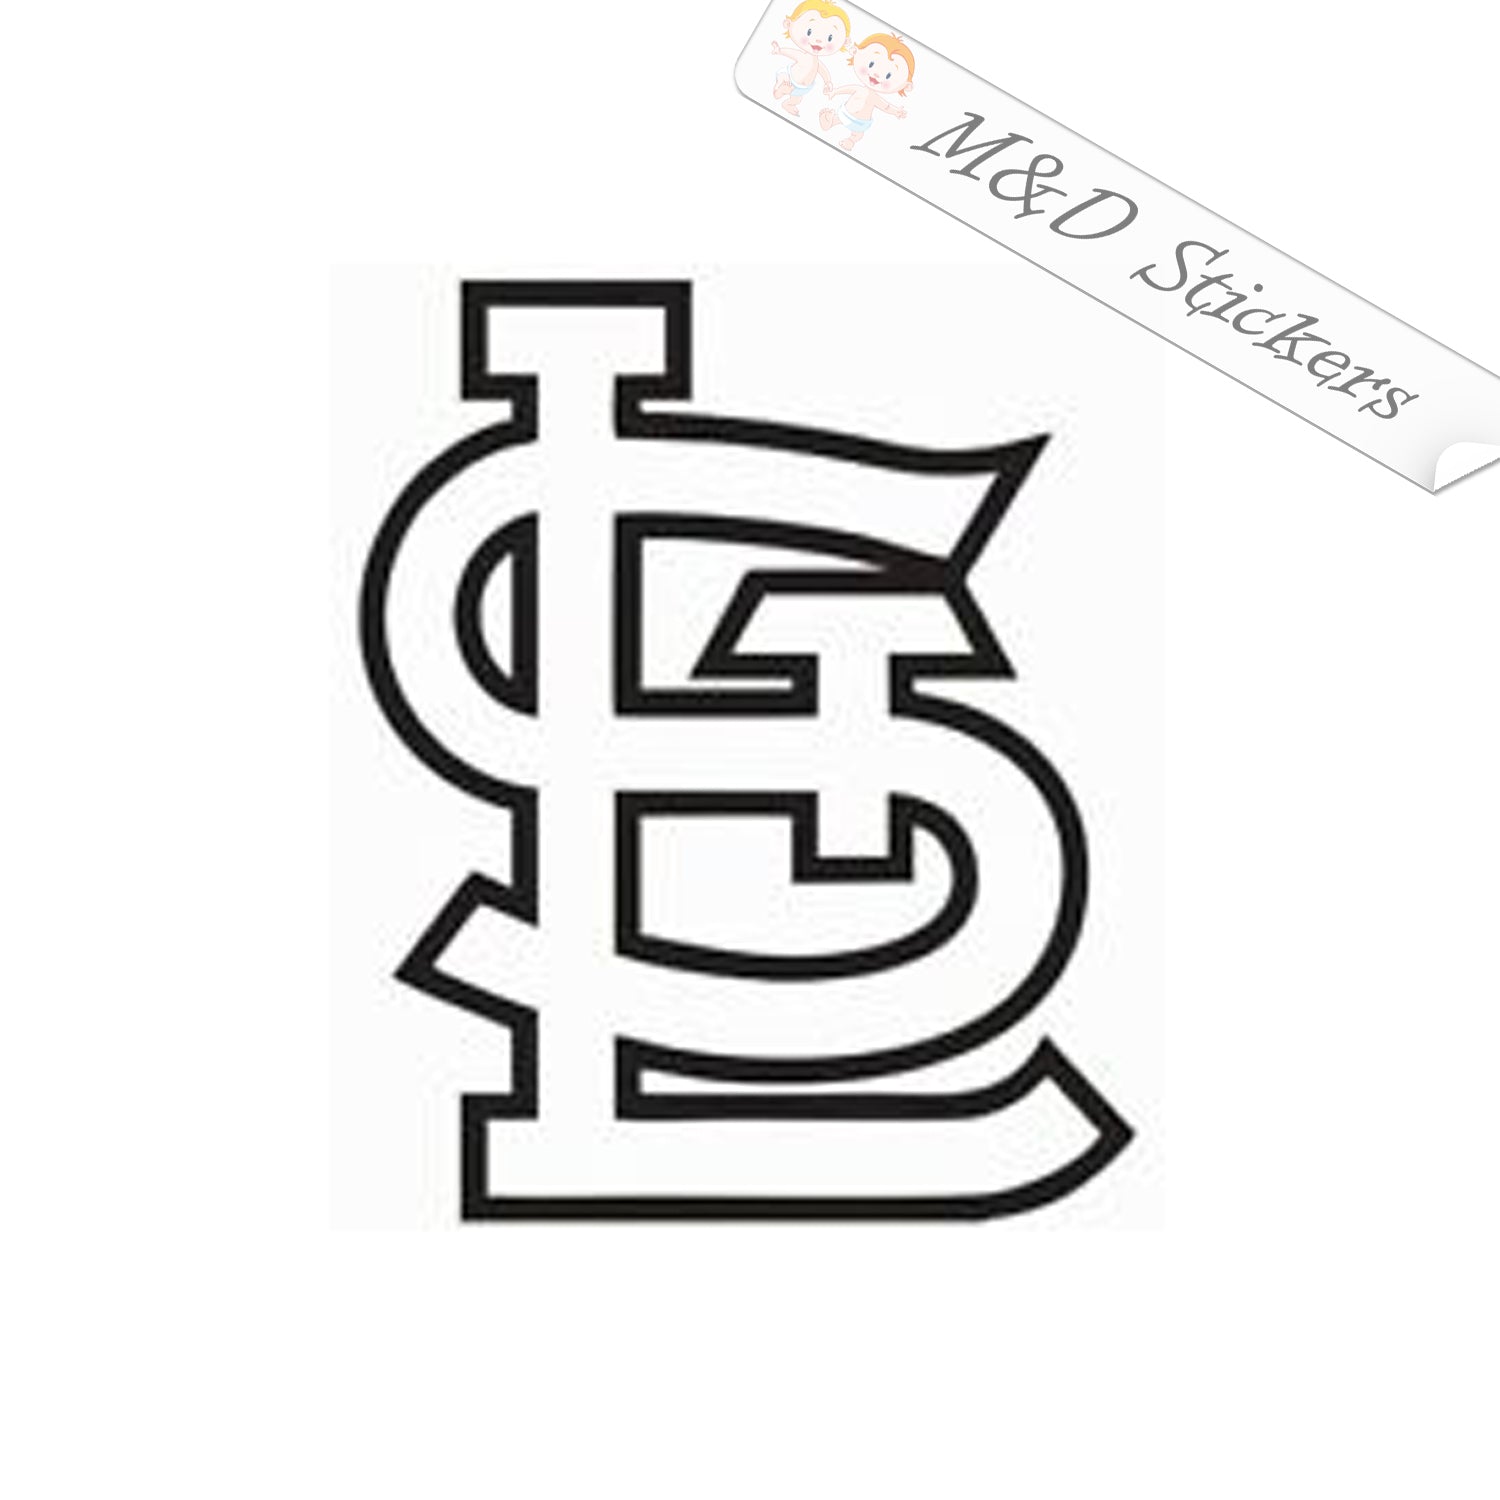 2x St. Louis Cardinals logo Vinyl Decal Sticker Different colors